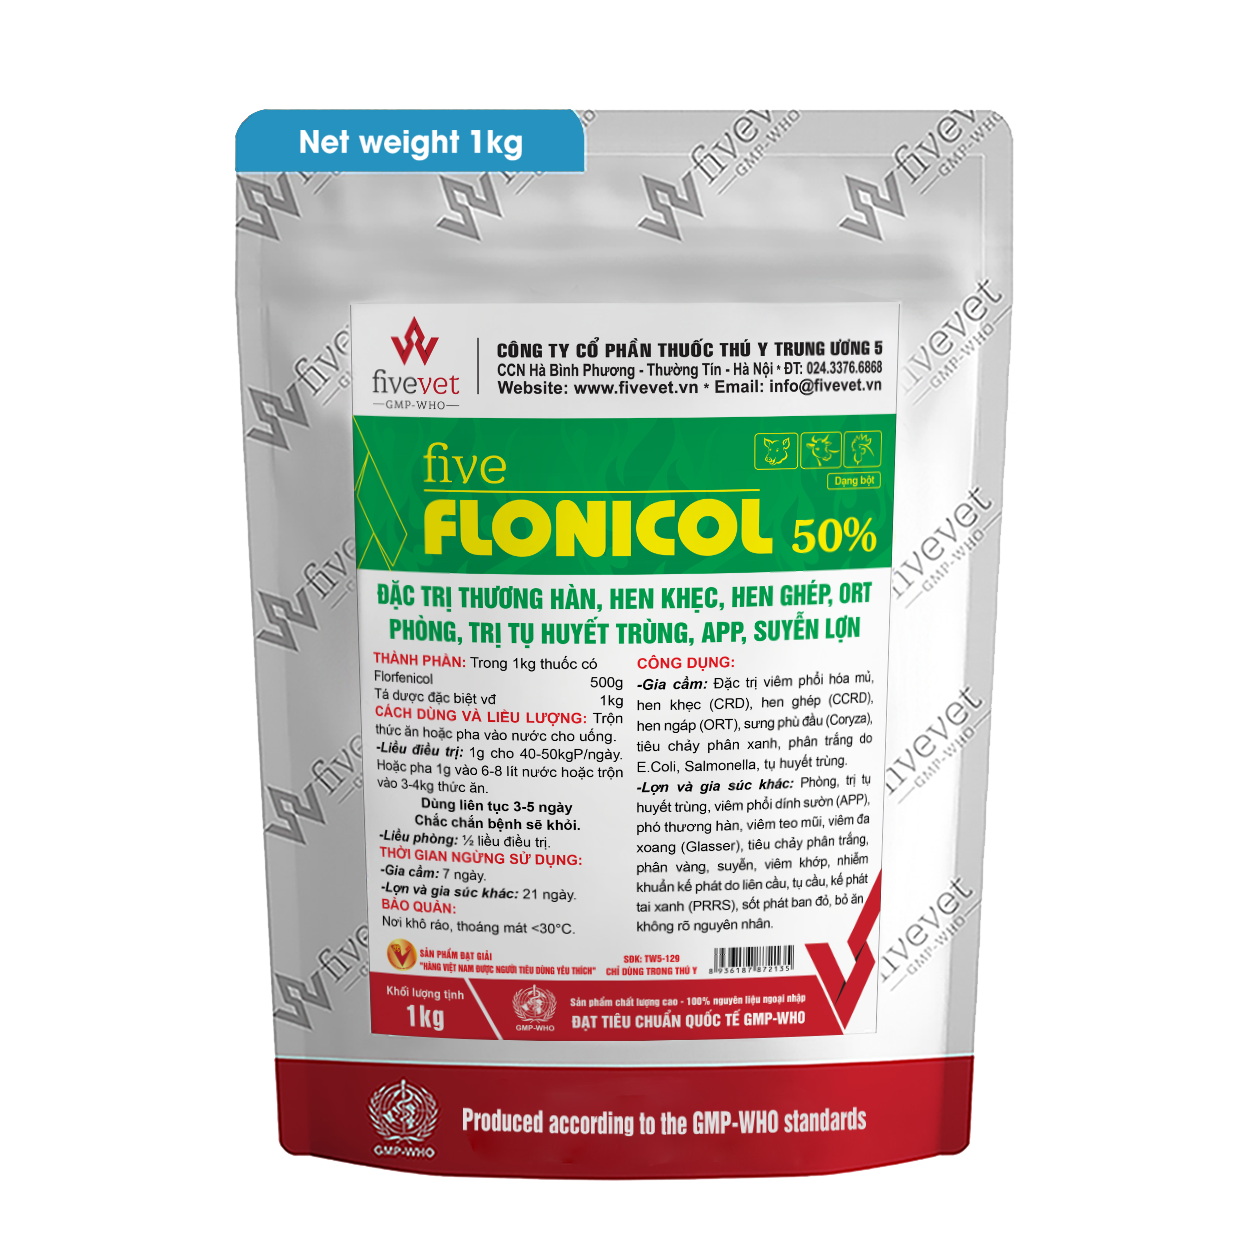 Five-Flonicol 50%